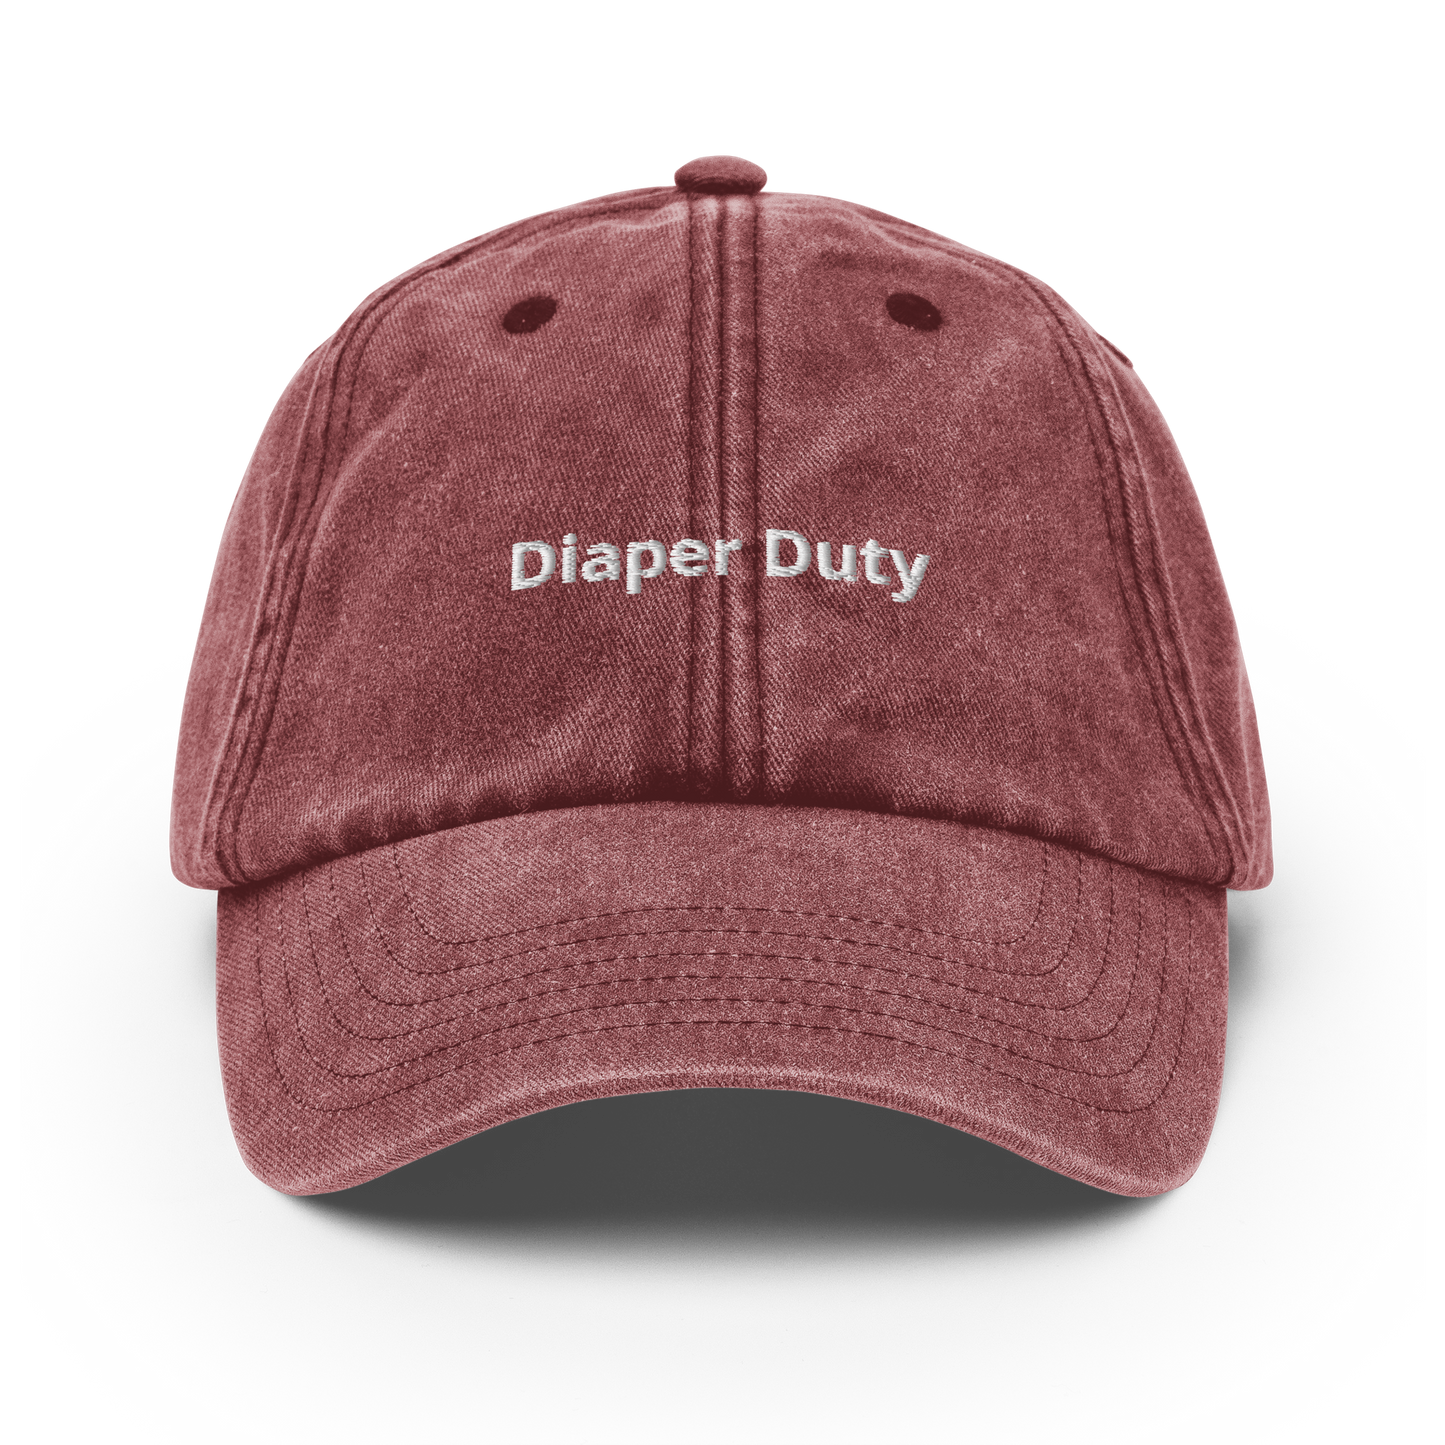 Diaper Duty - Vintage Hat